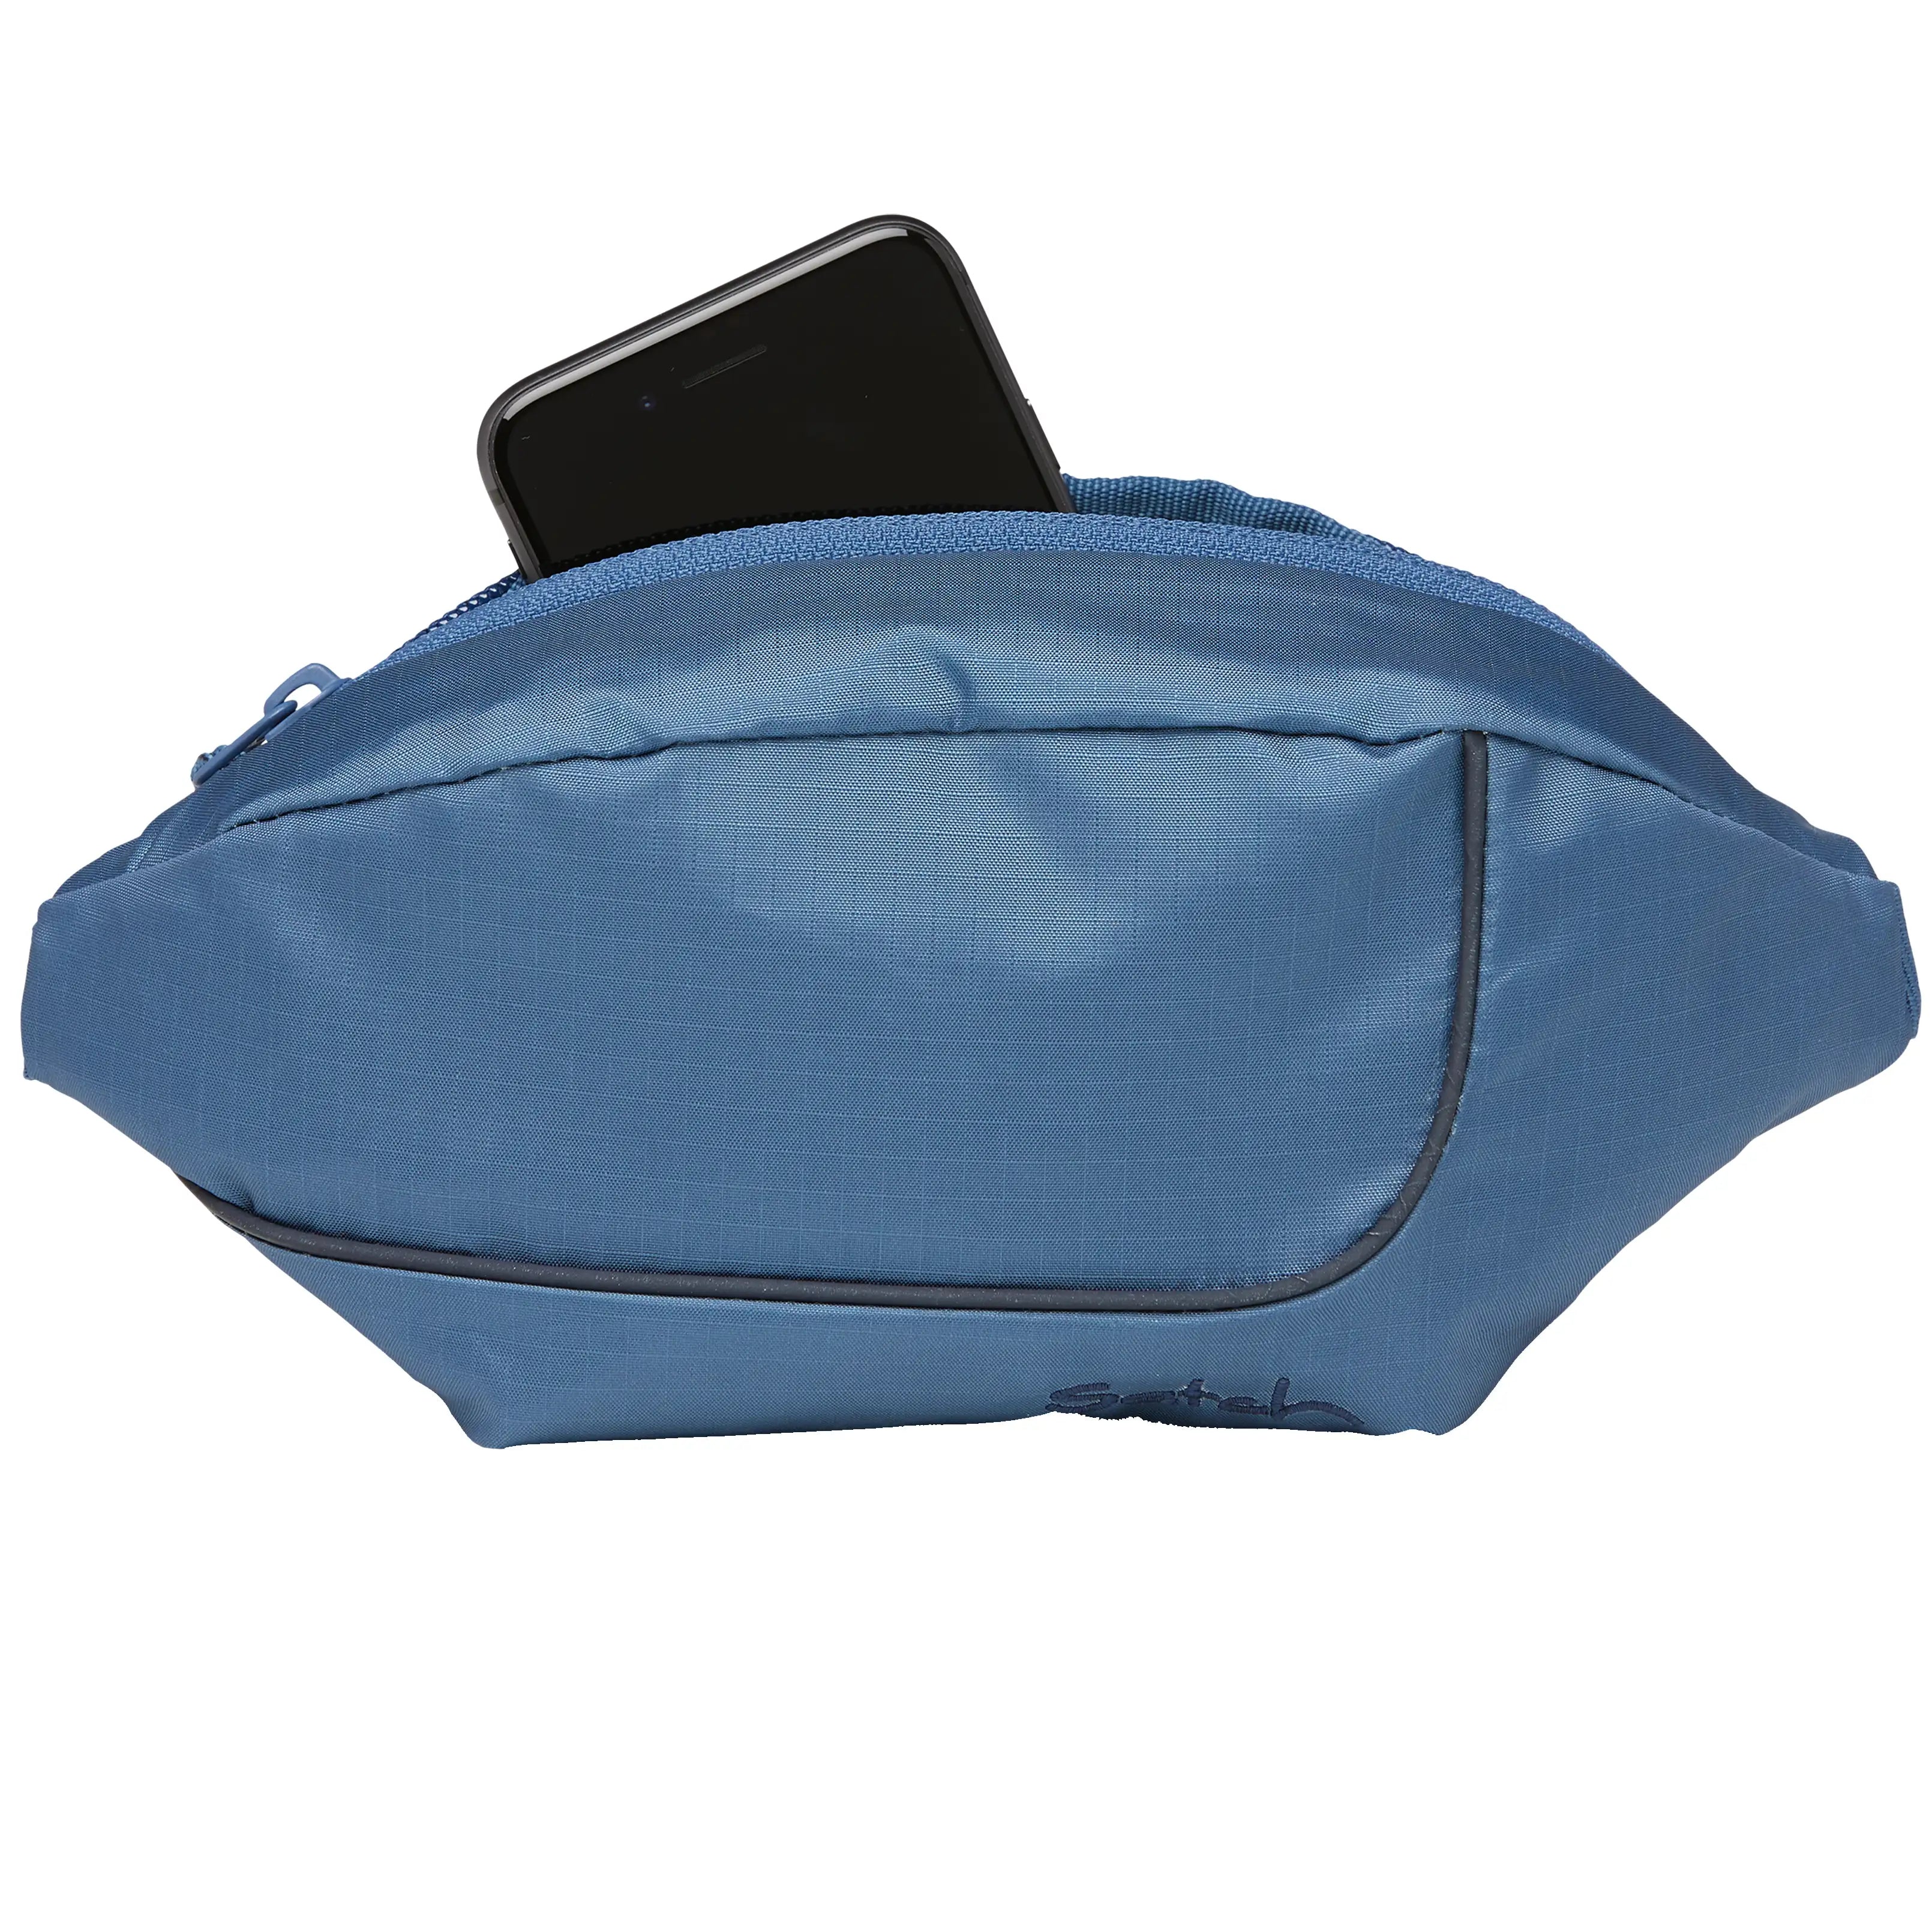 Satch Cross Easy Belt Bag 23 cm - Ripstop Blue